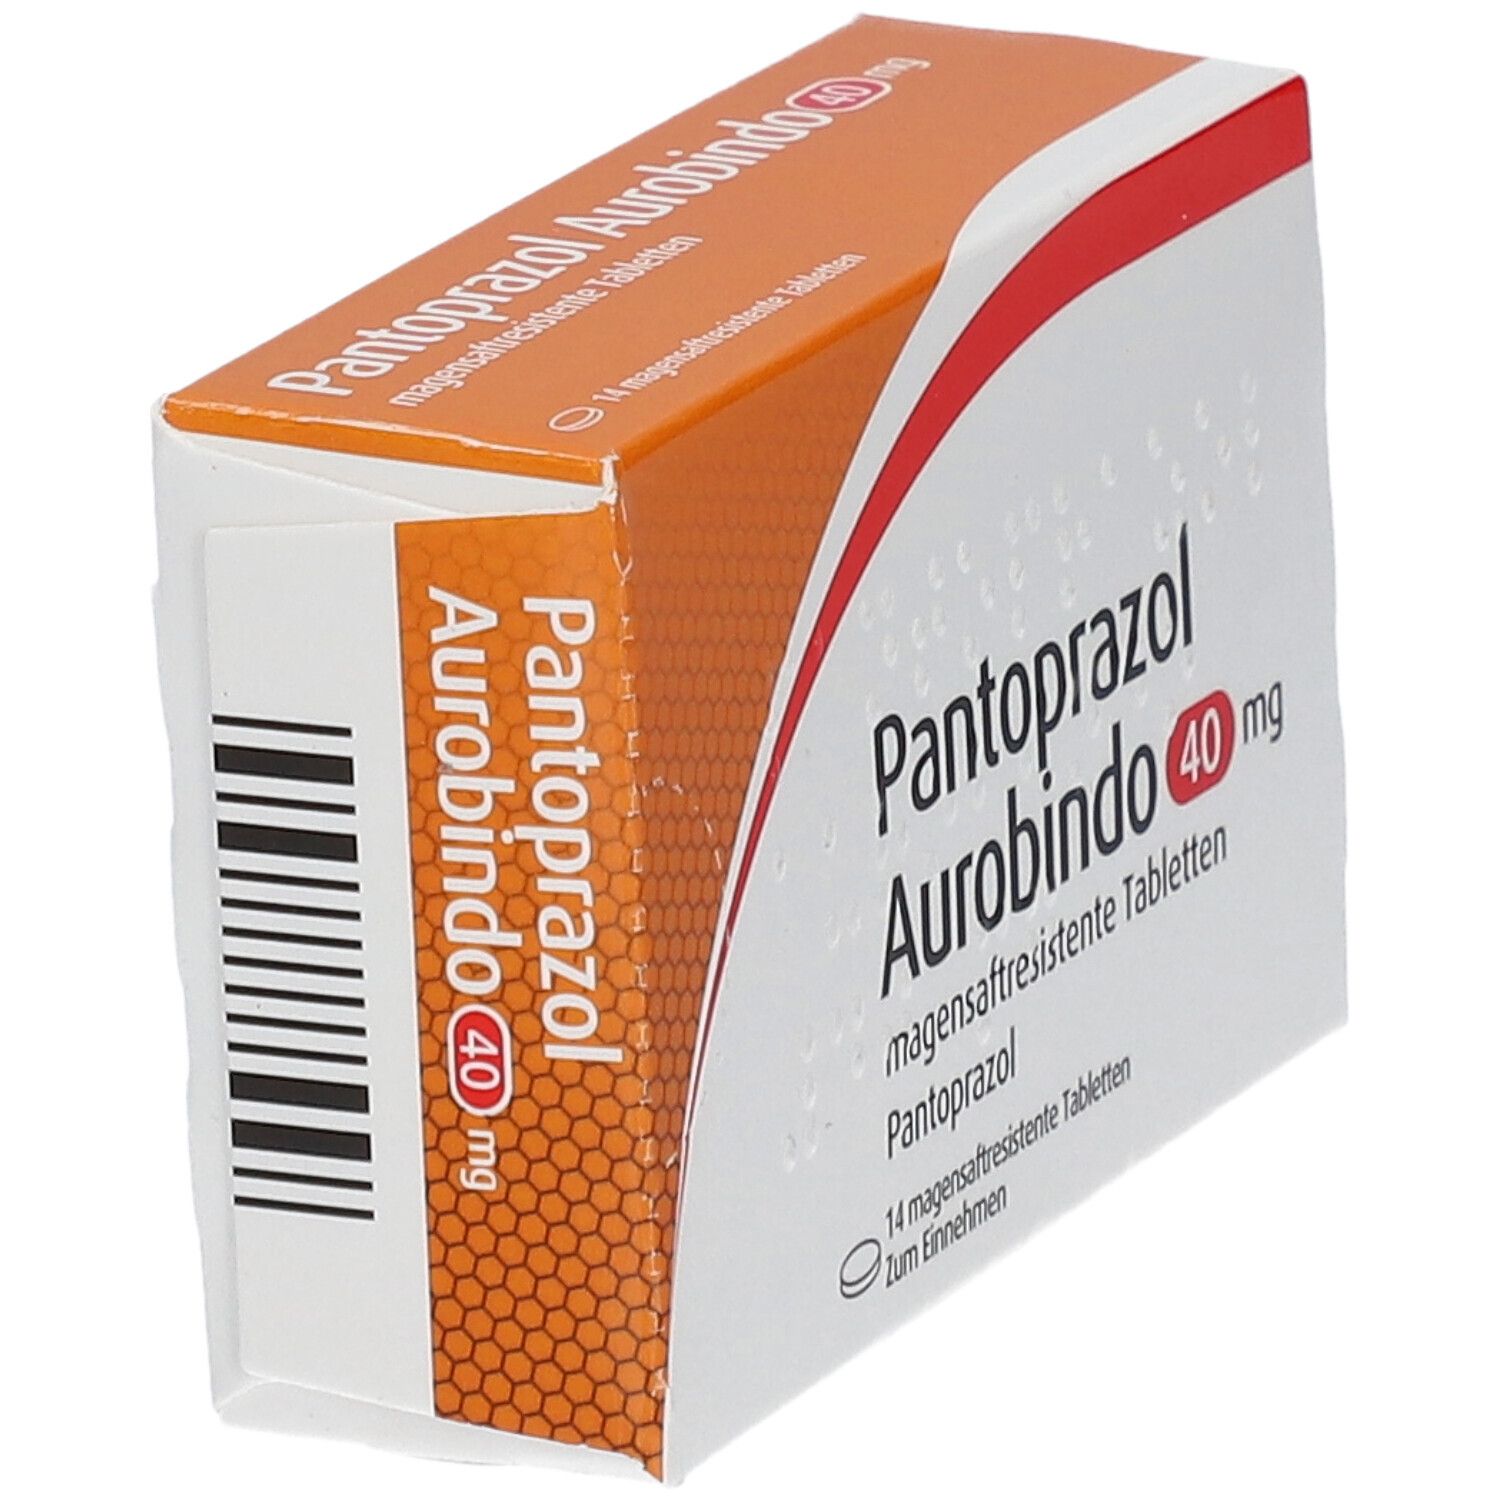 Pantoprazol Aurobindo 40 mg